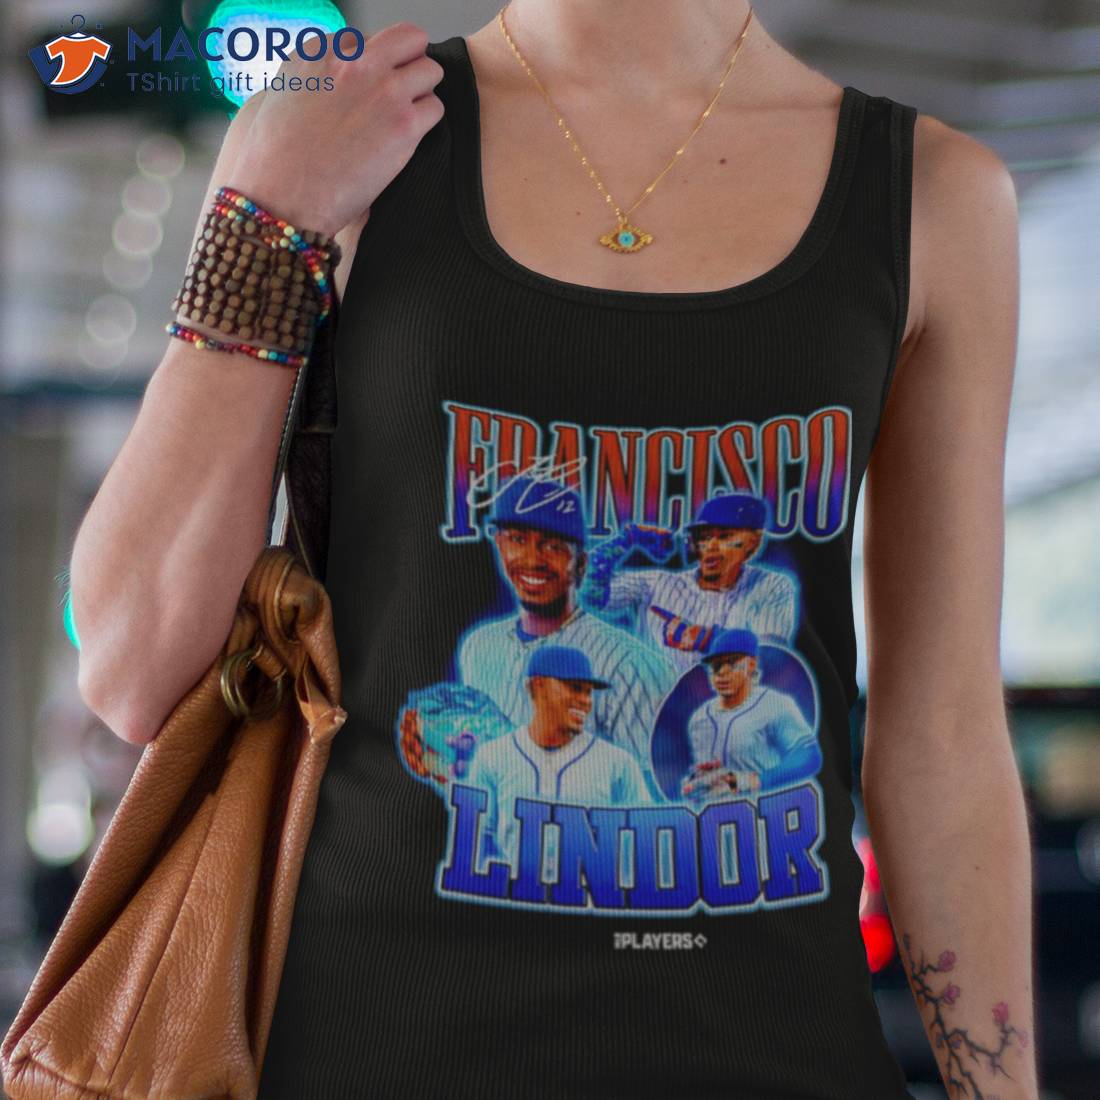 New York Mets Hawaiian Shirtnew Fabric for 2017 